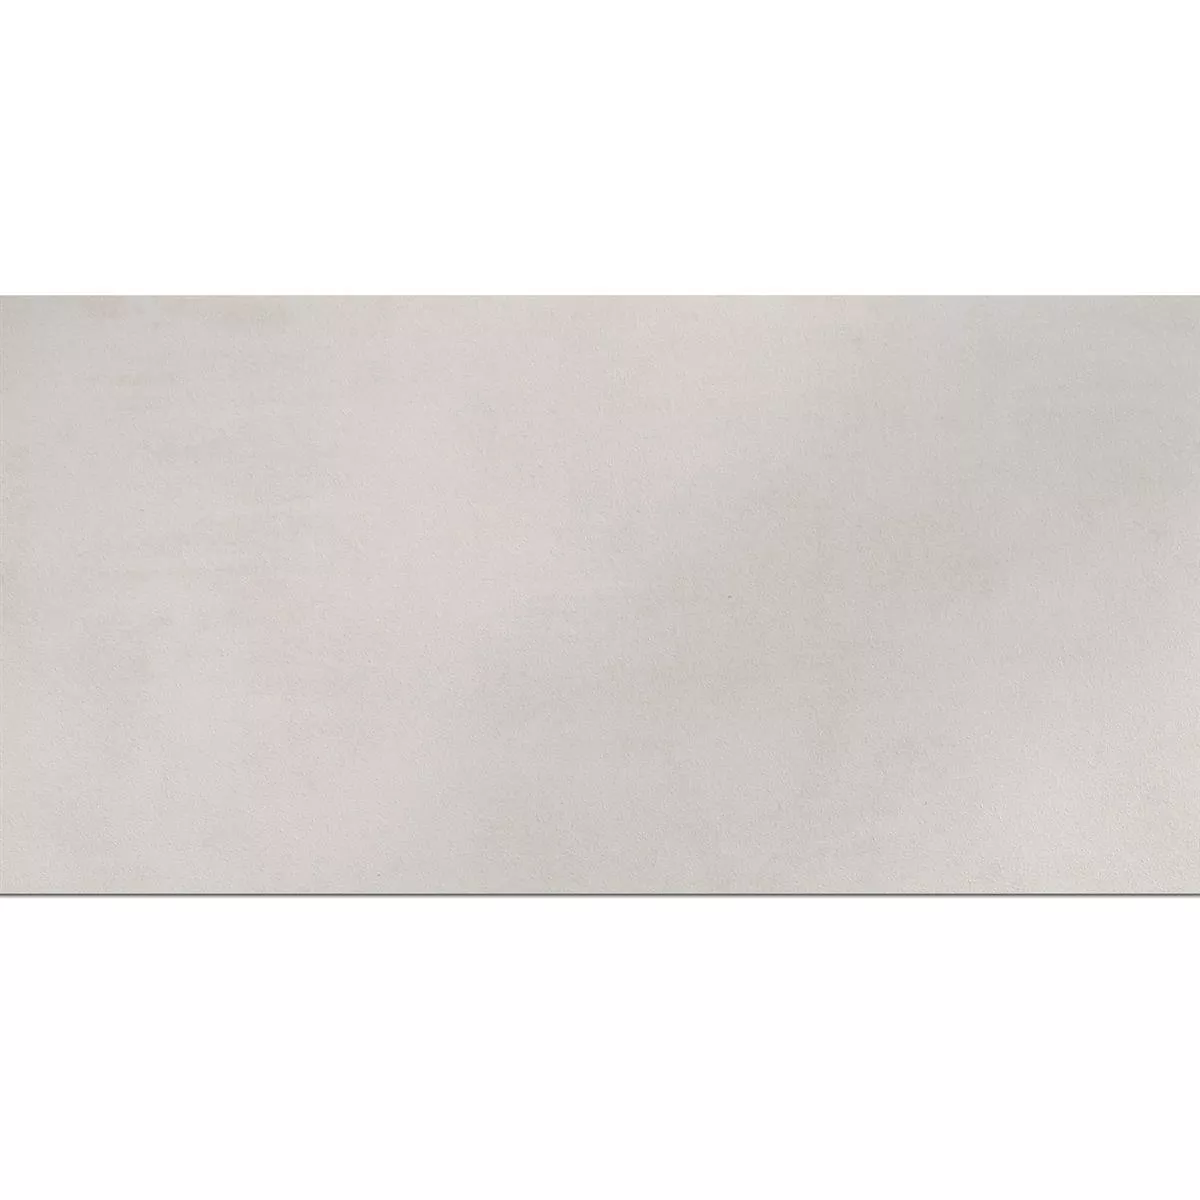 Tерасовидни Плочи Zeus Бетонен Вид White 30x60cm